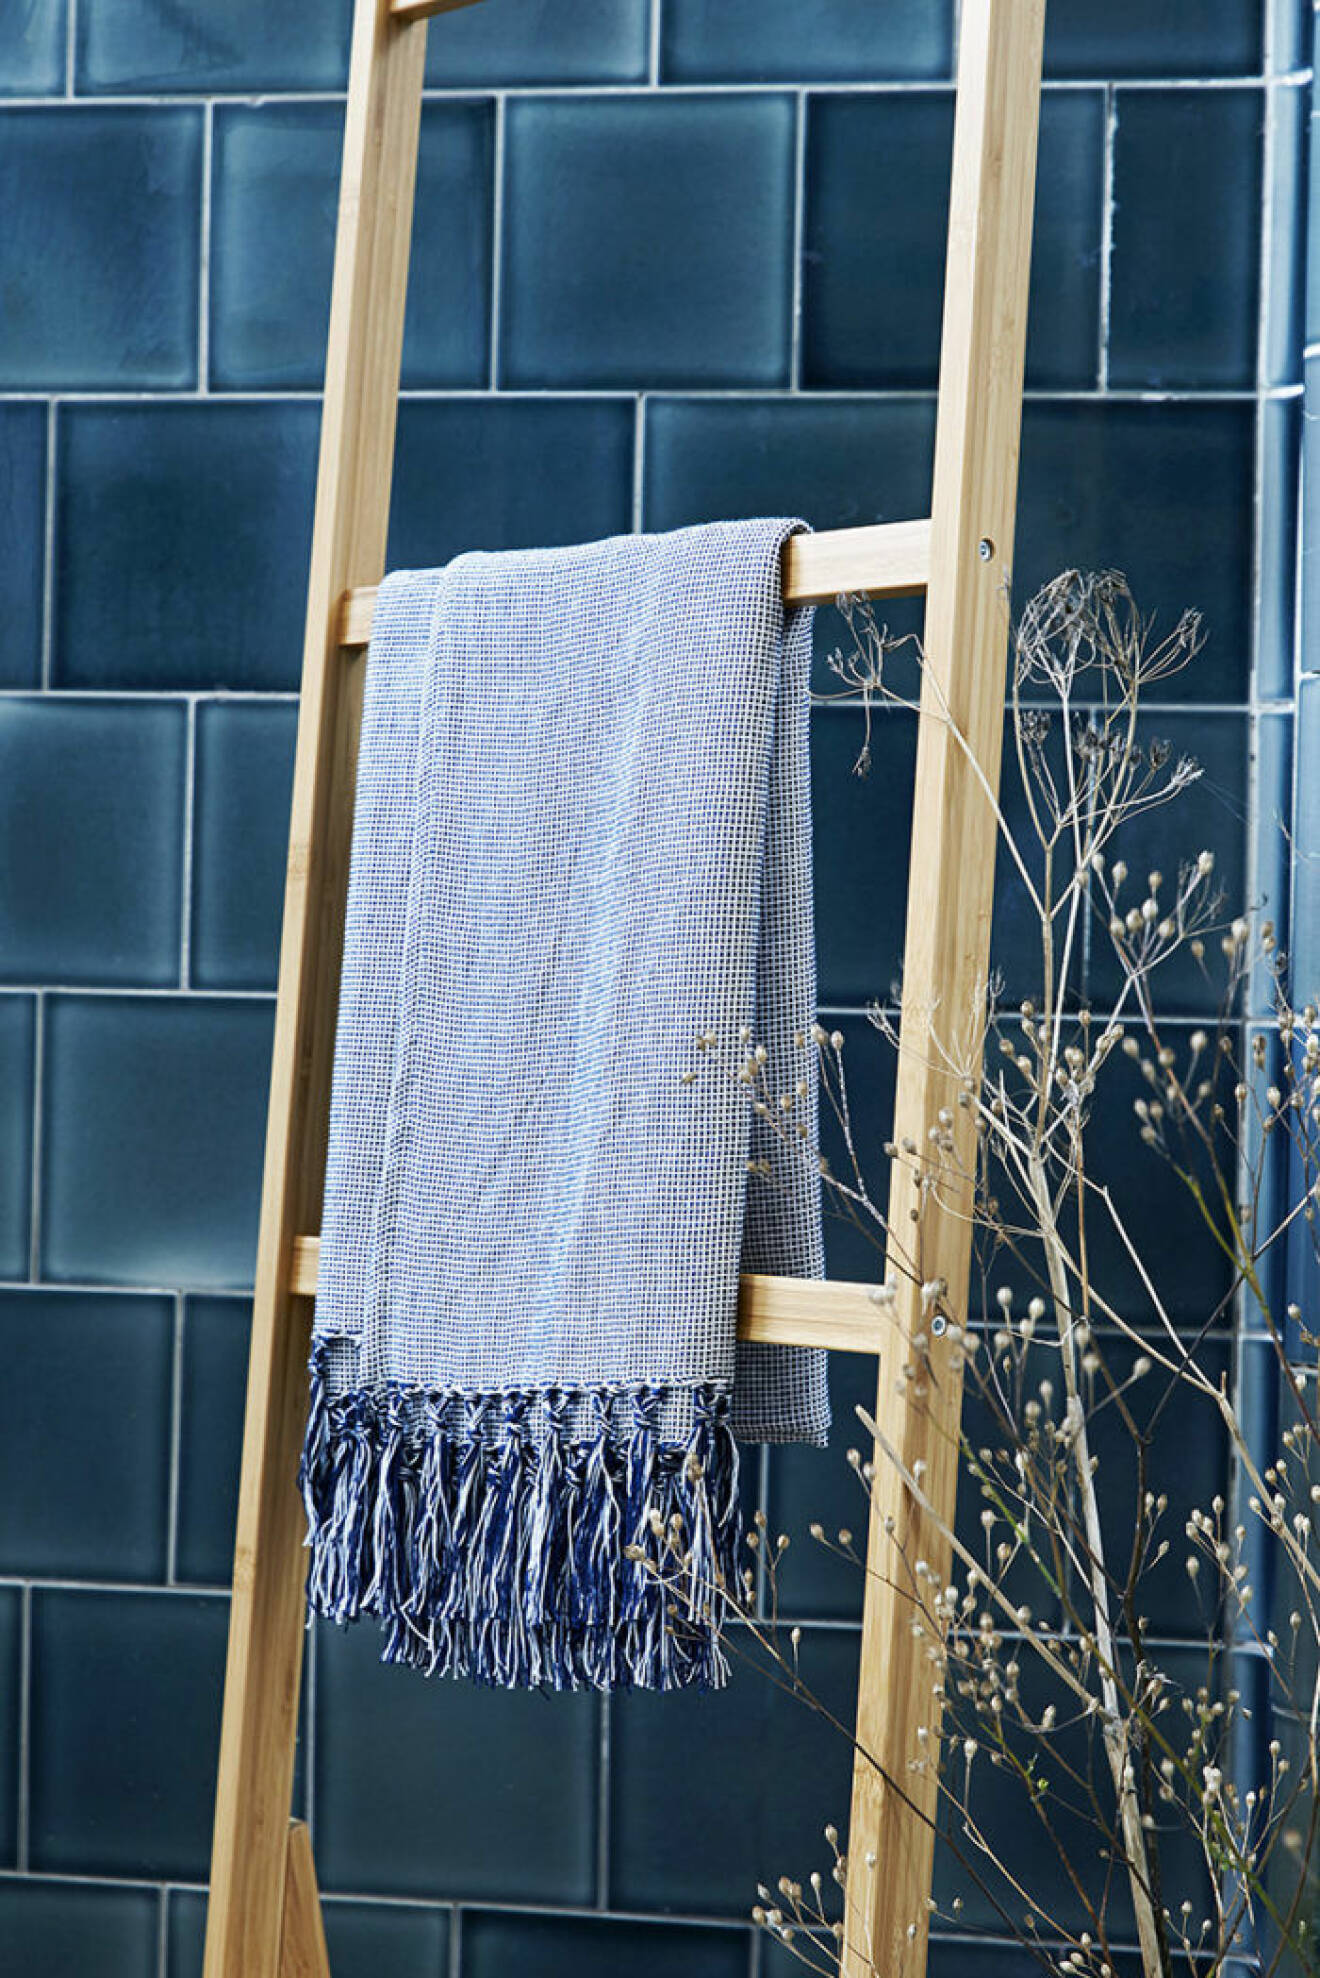 Ikeas kollektion Innehållsrik, stege med handduk.